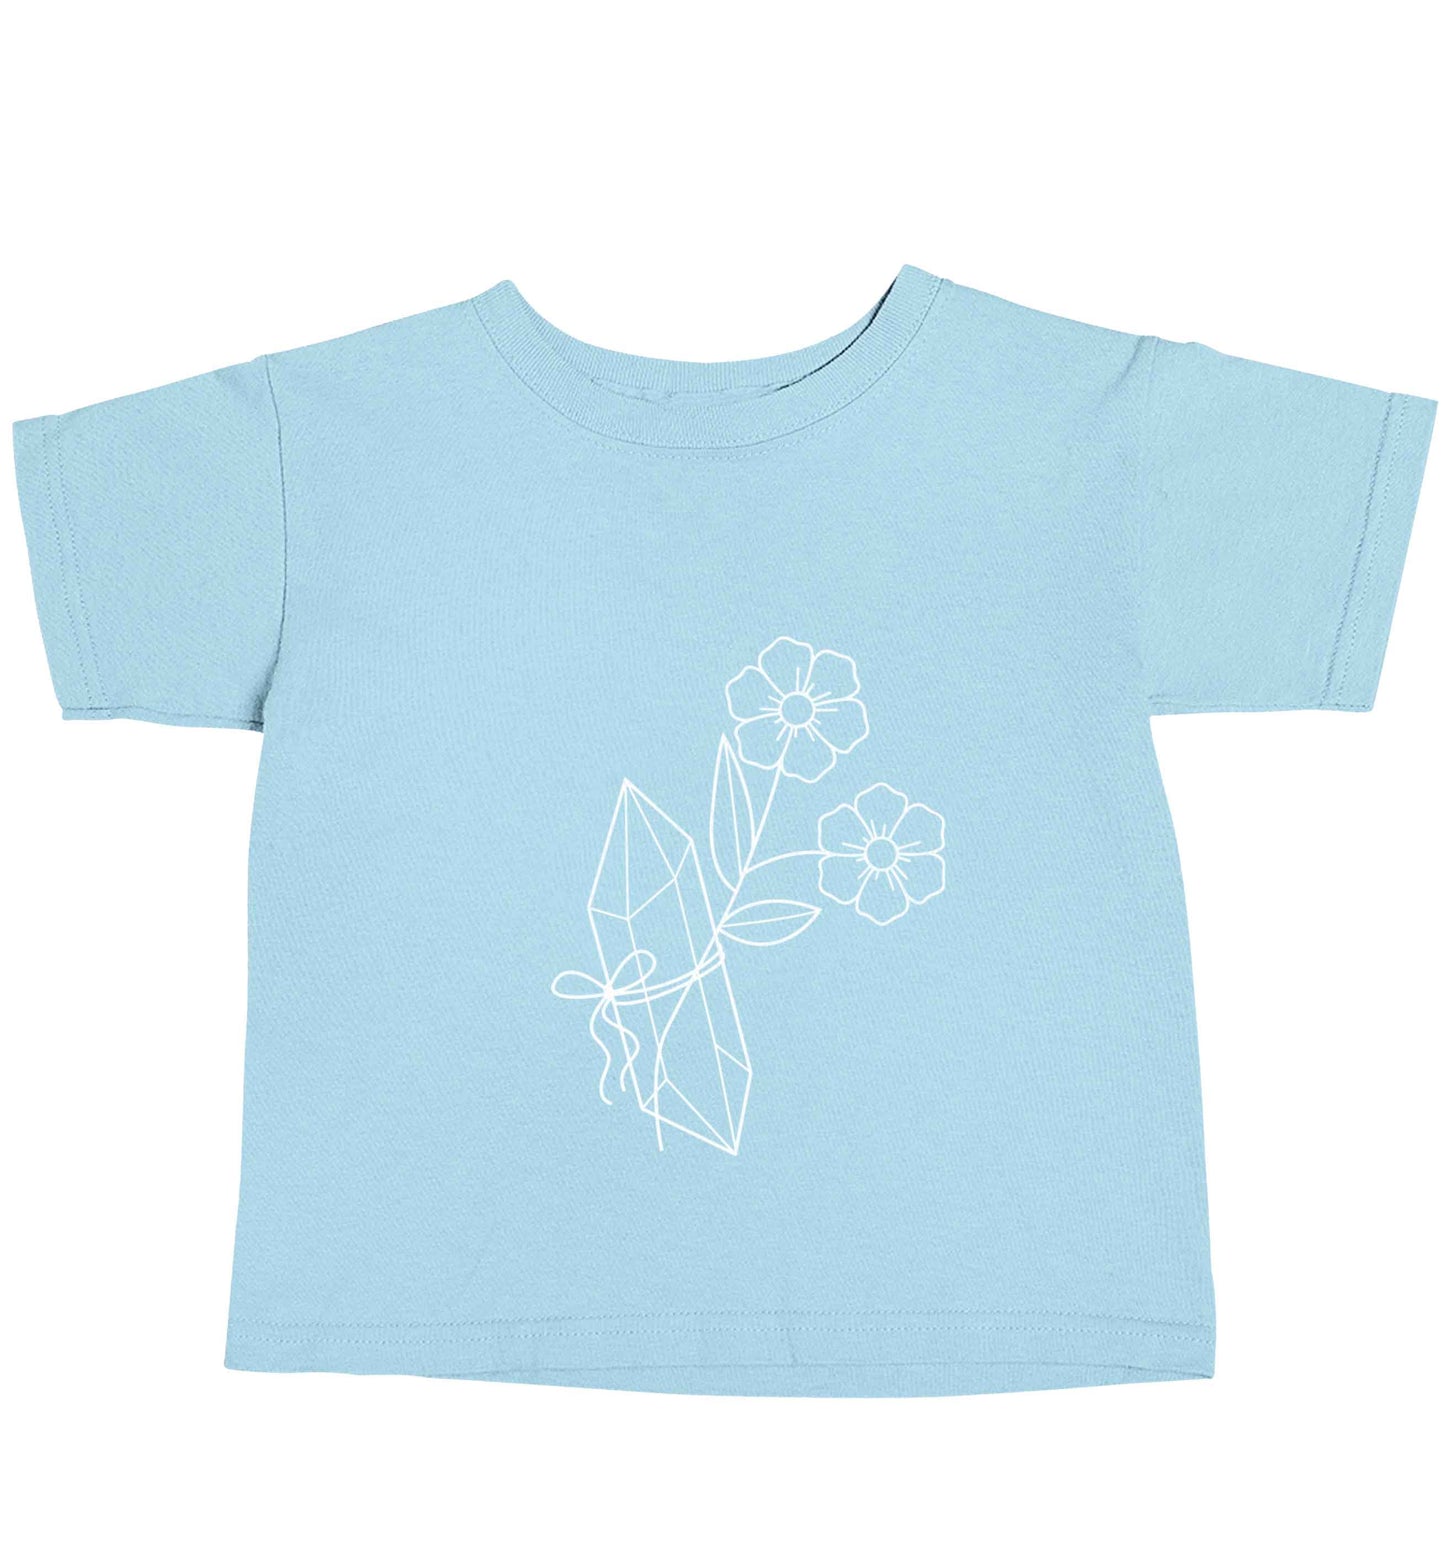 Crystal flower illustration light blue baby toddler Tshirt 2 Years